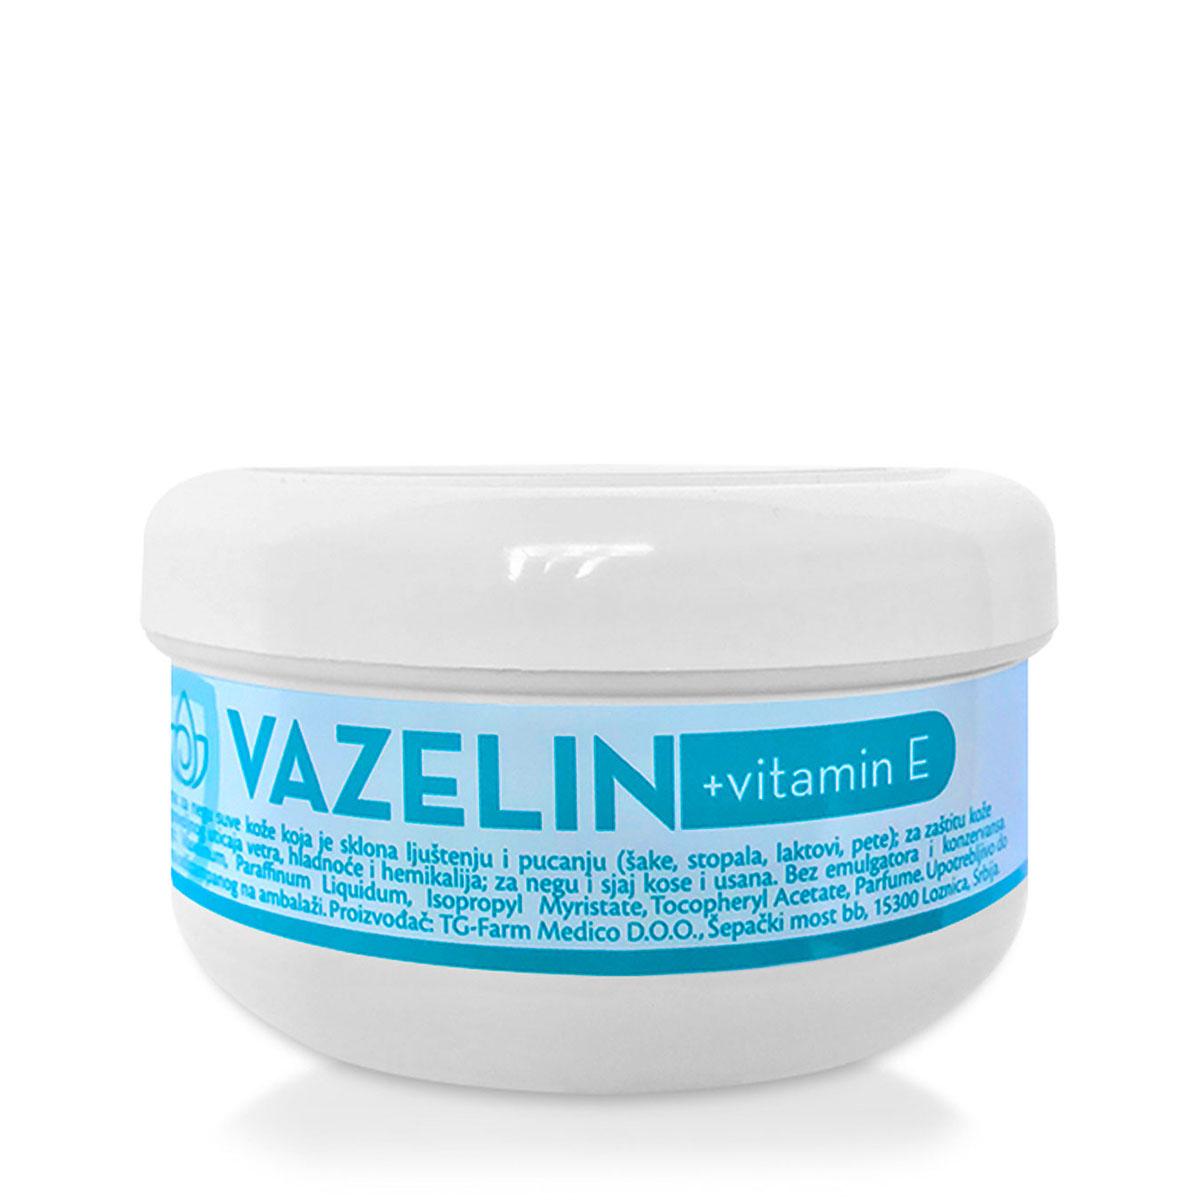 TG-FARM MEDICO Vazelin + Vitamin E krema 100 ml